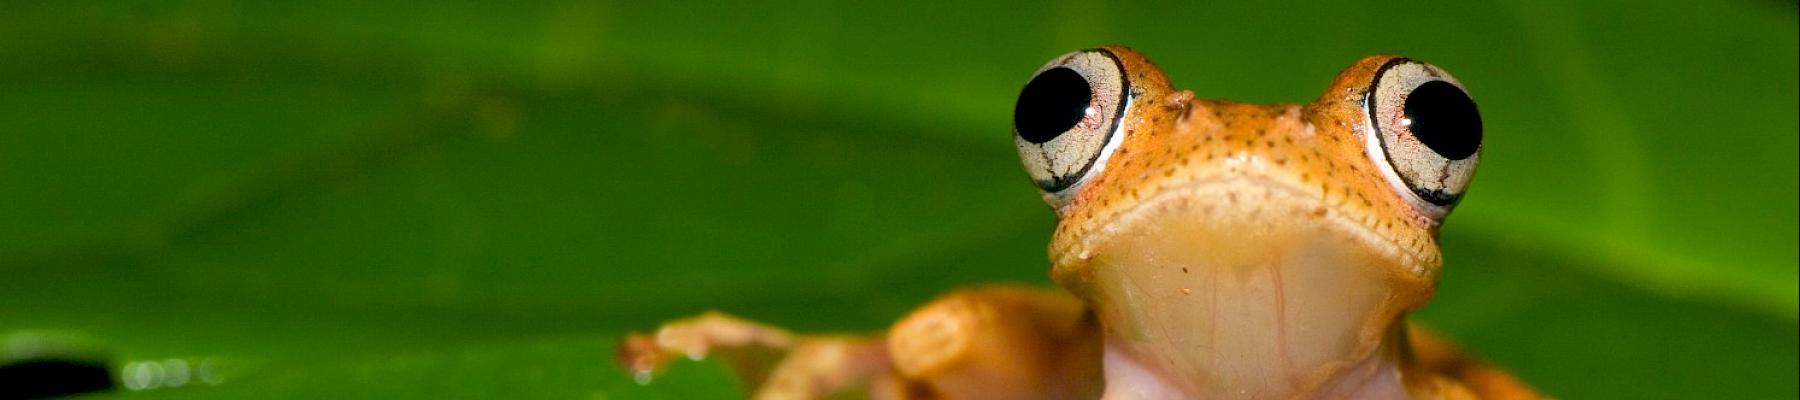 Frog (Boophis sp) on leaf, Madagascar © naturepl.com / Edwin Giesbers / WWF